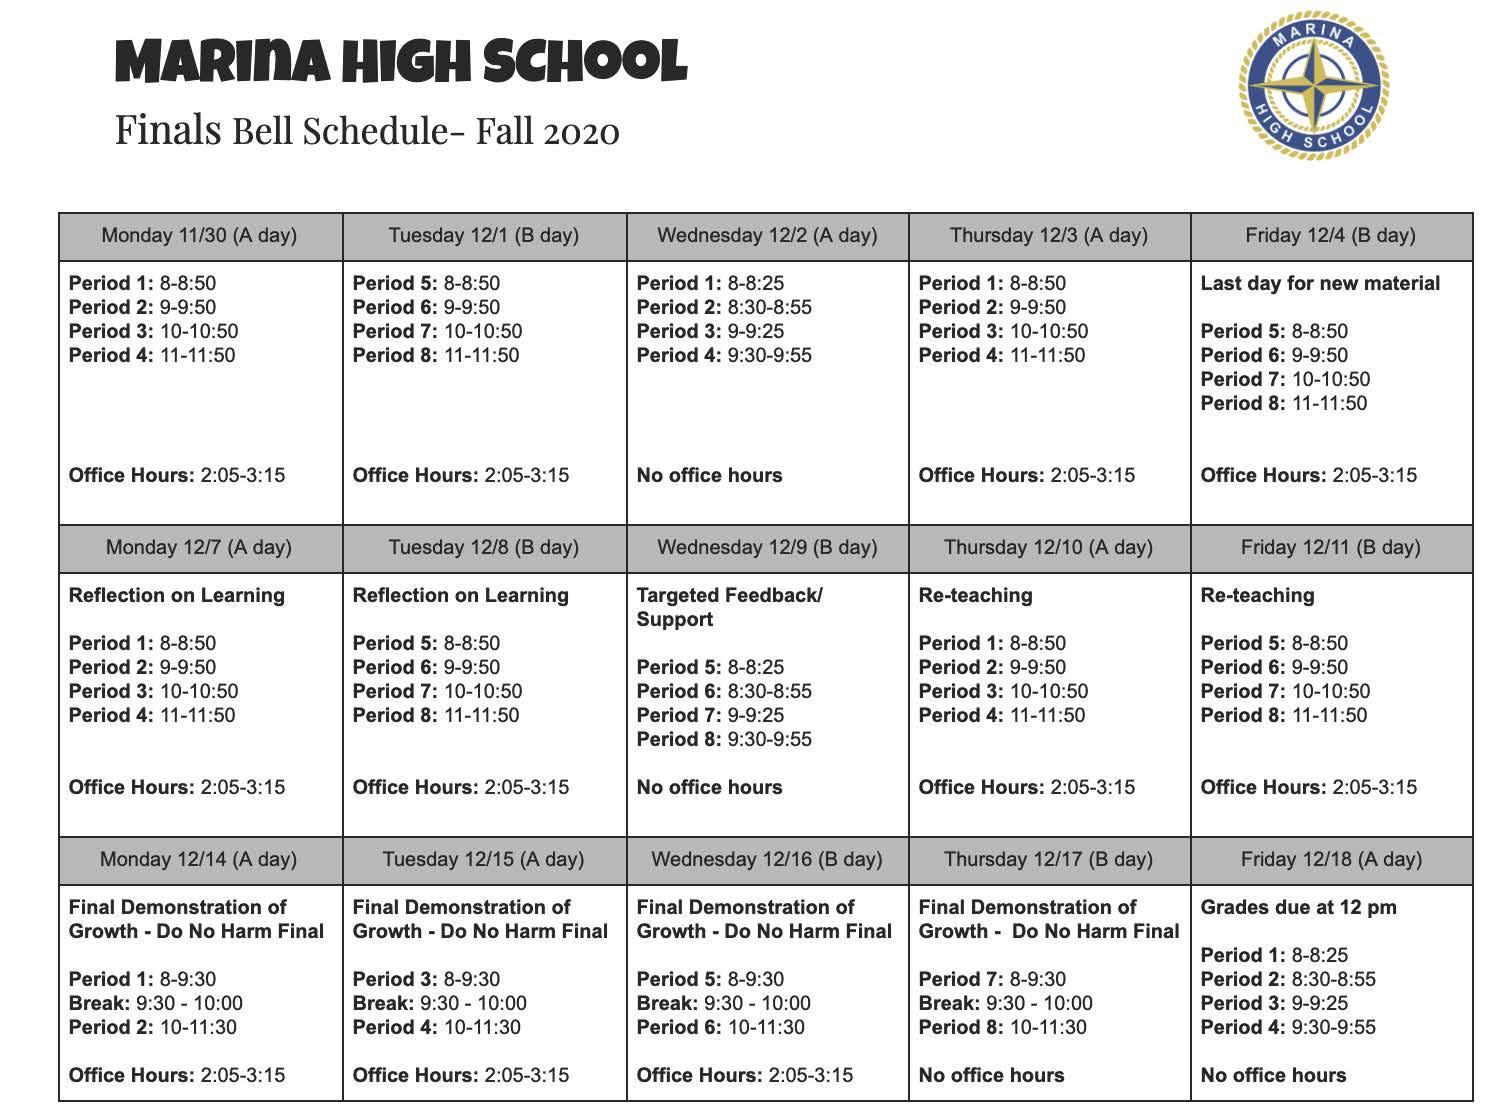 Marina High School Final Schedule